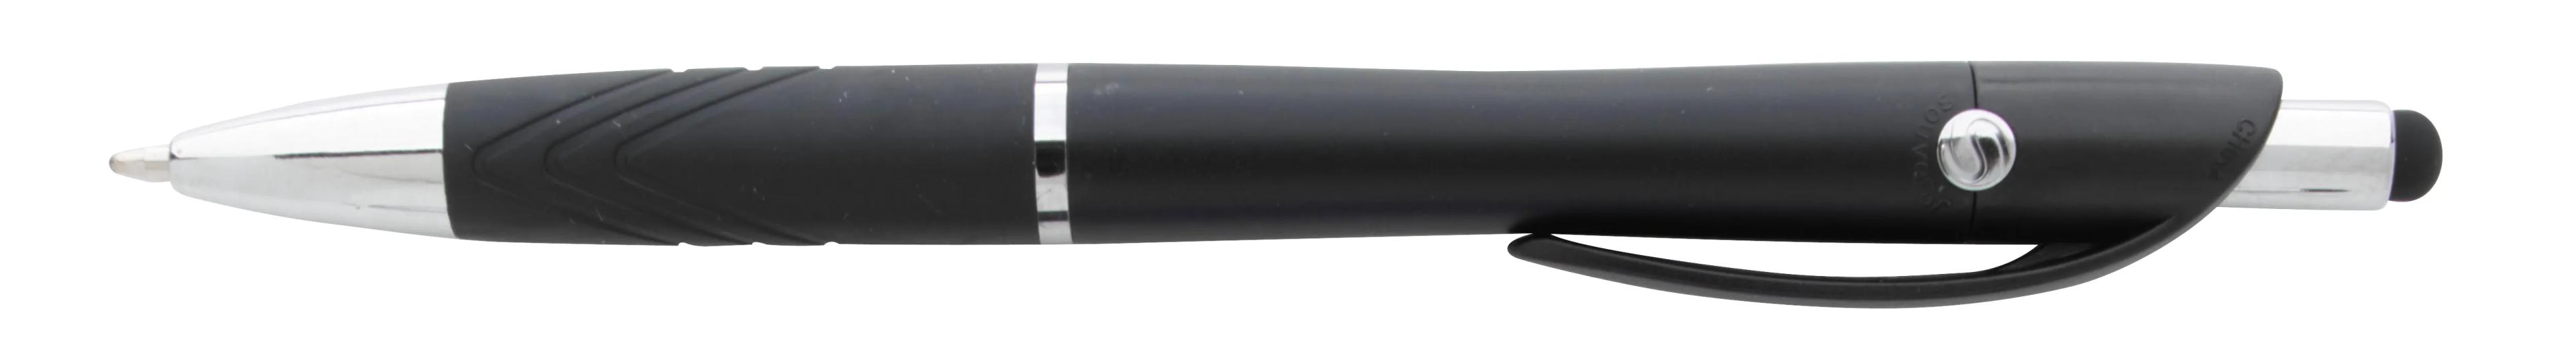 Souvenir® Emblem Stylus Pen 13 of 37